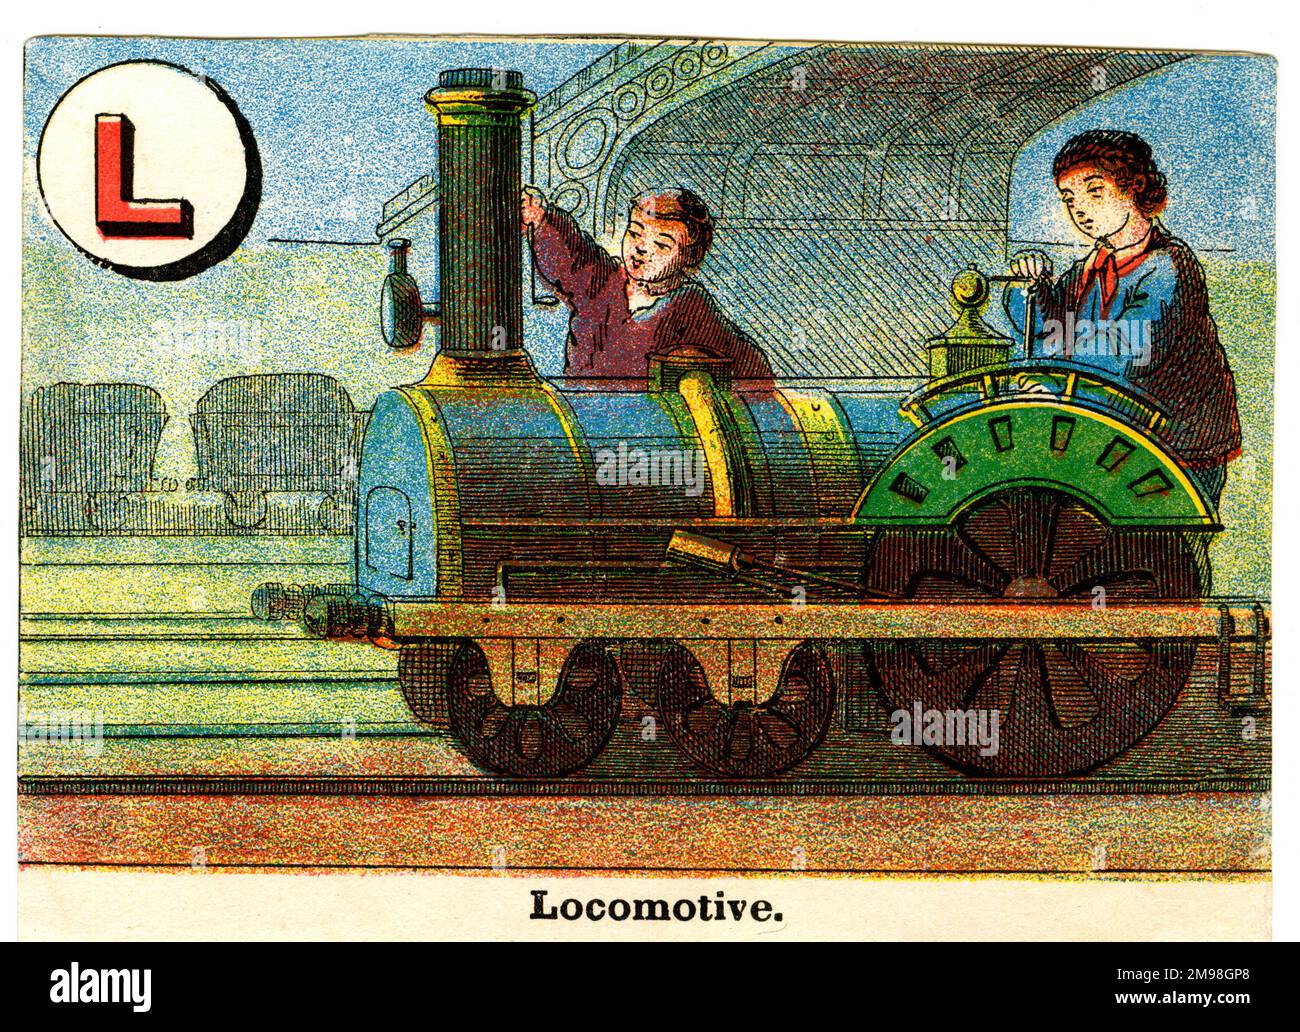 French Railway Alphabet - L for Locomotive (engine). Stock Photo